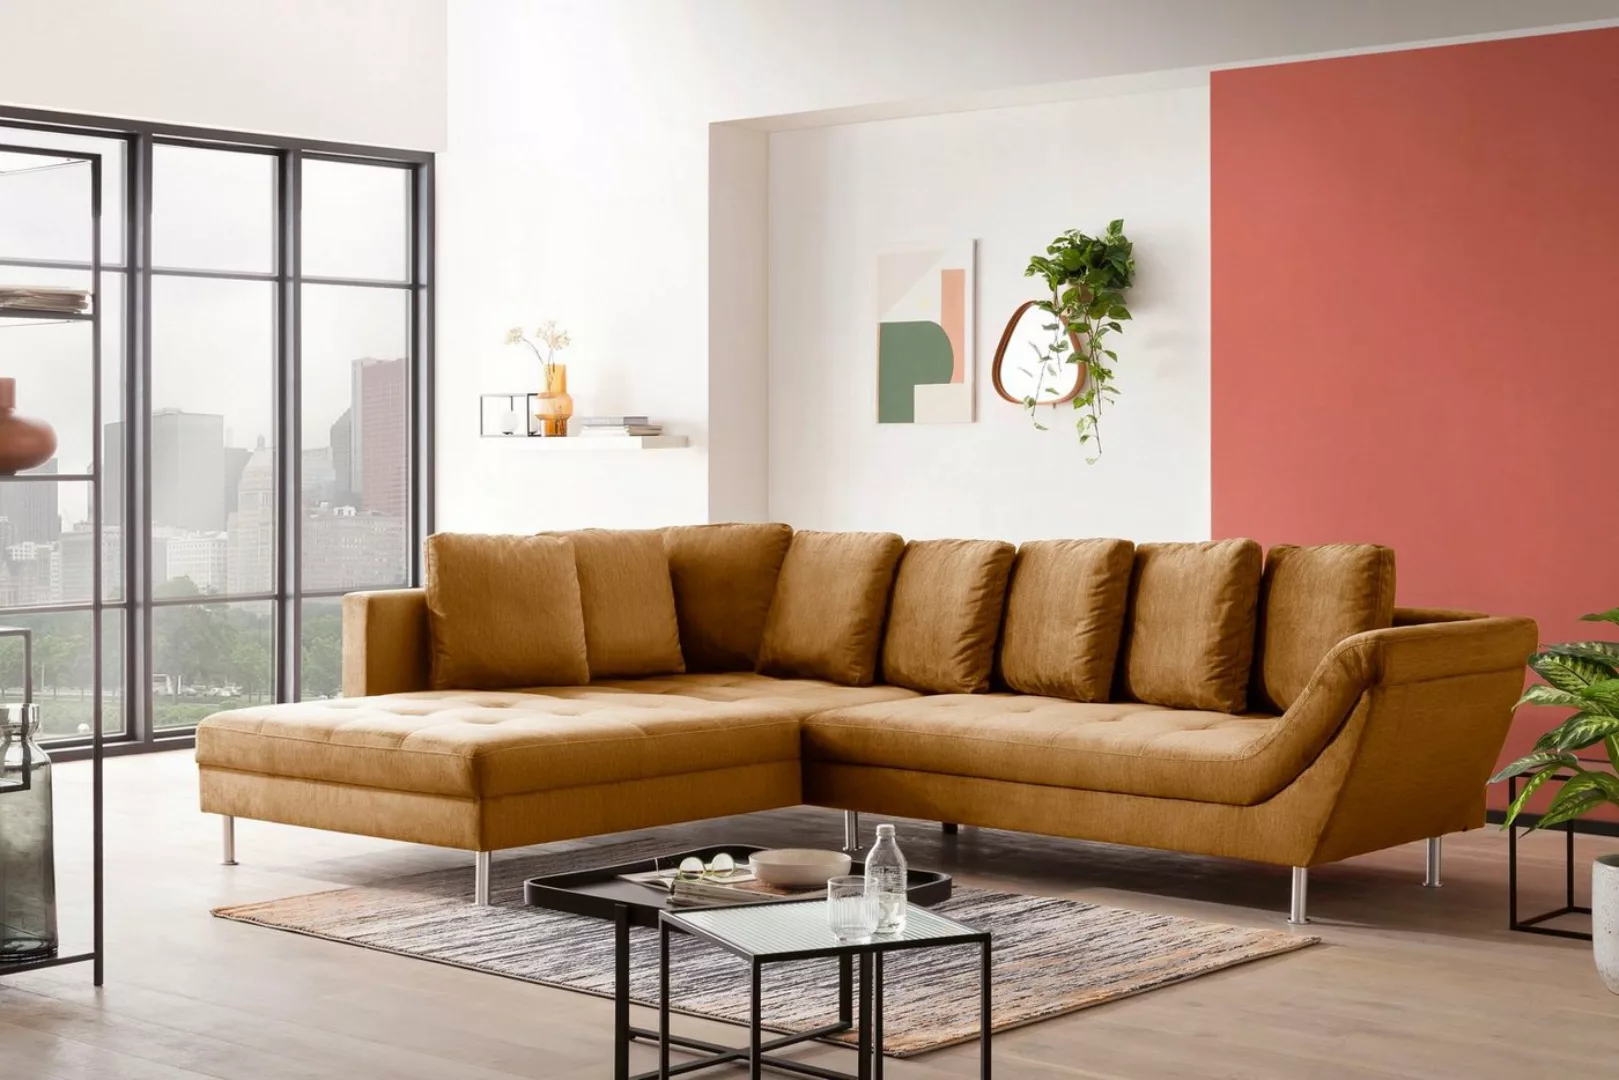 exxpo - sofa fashion Ecksofa Laconi, L-Form, In hochwertiger Verarbeitung, günstig online kaufen